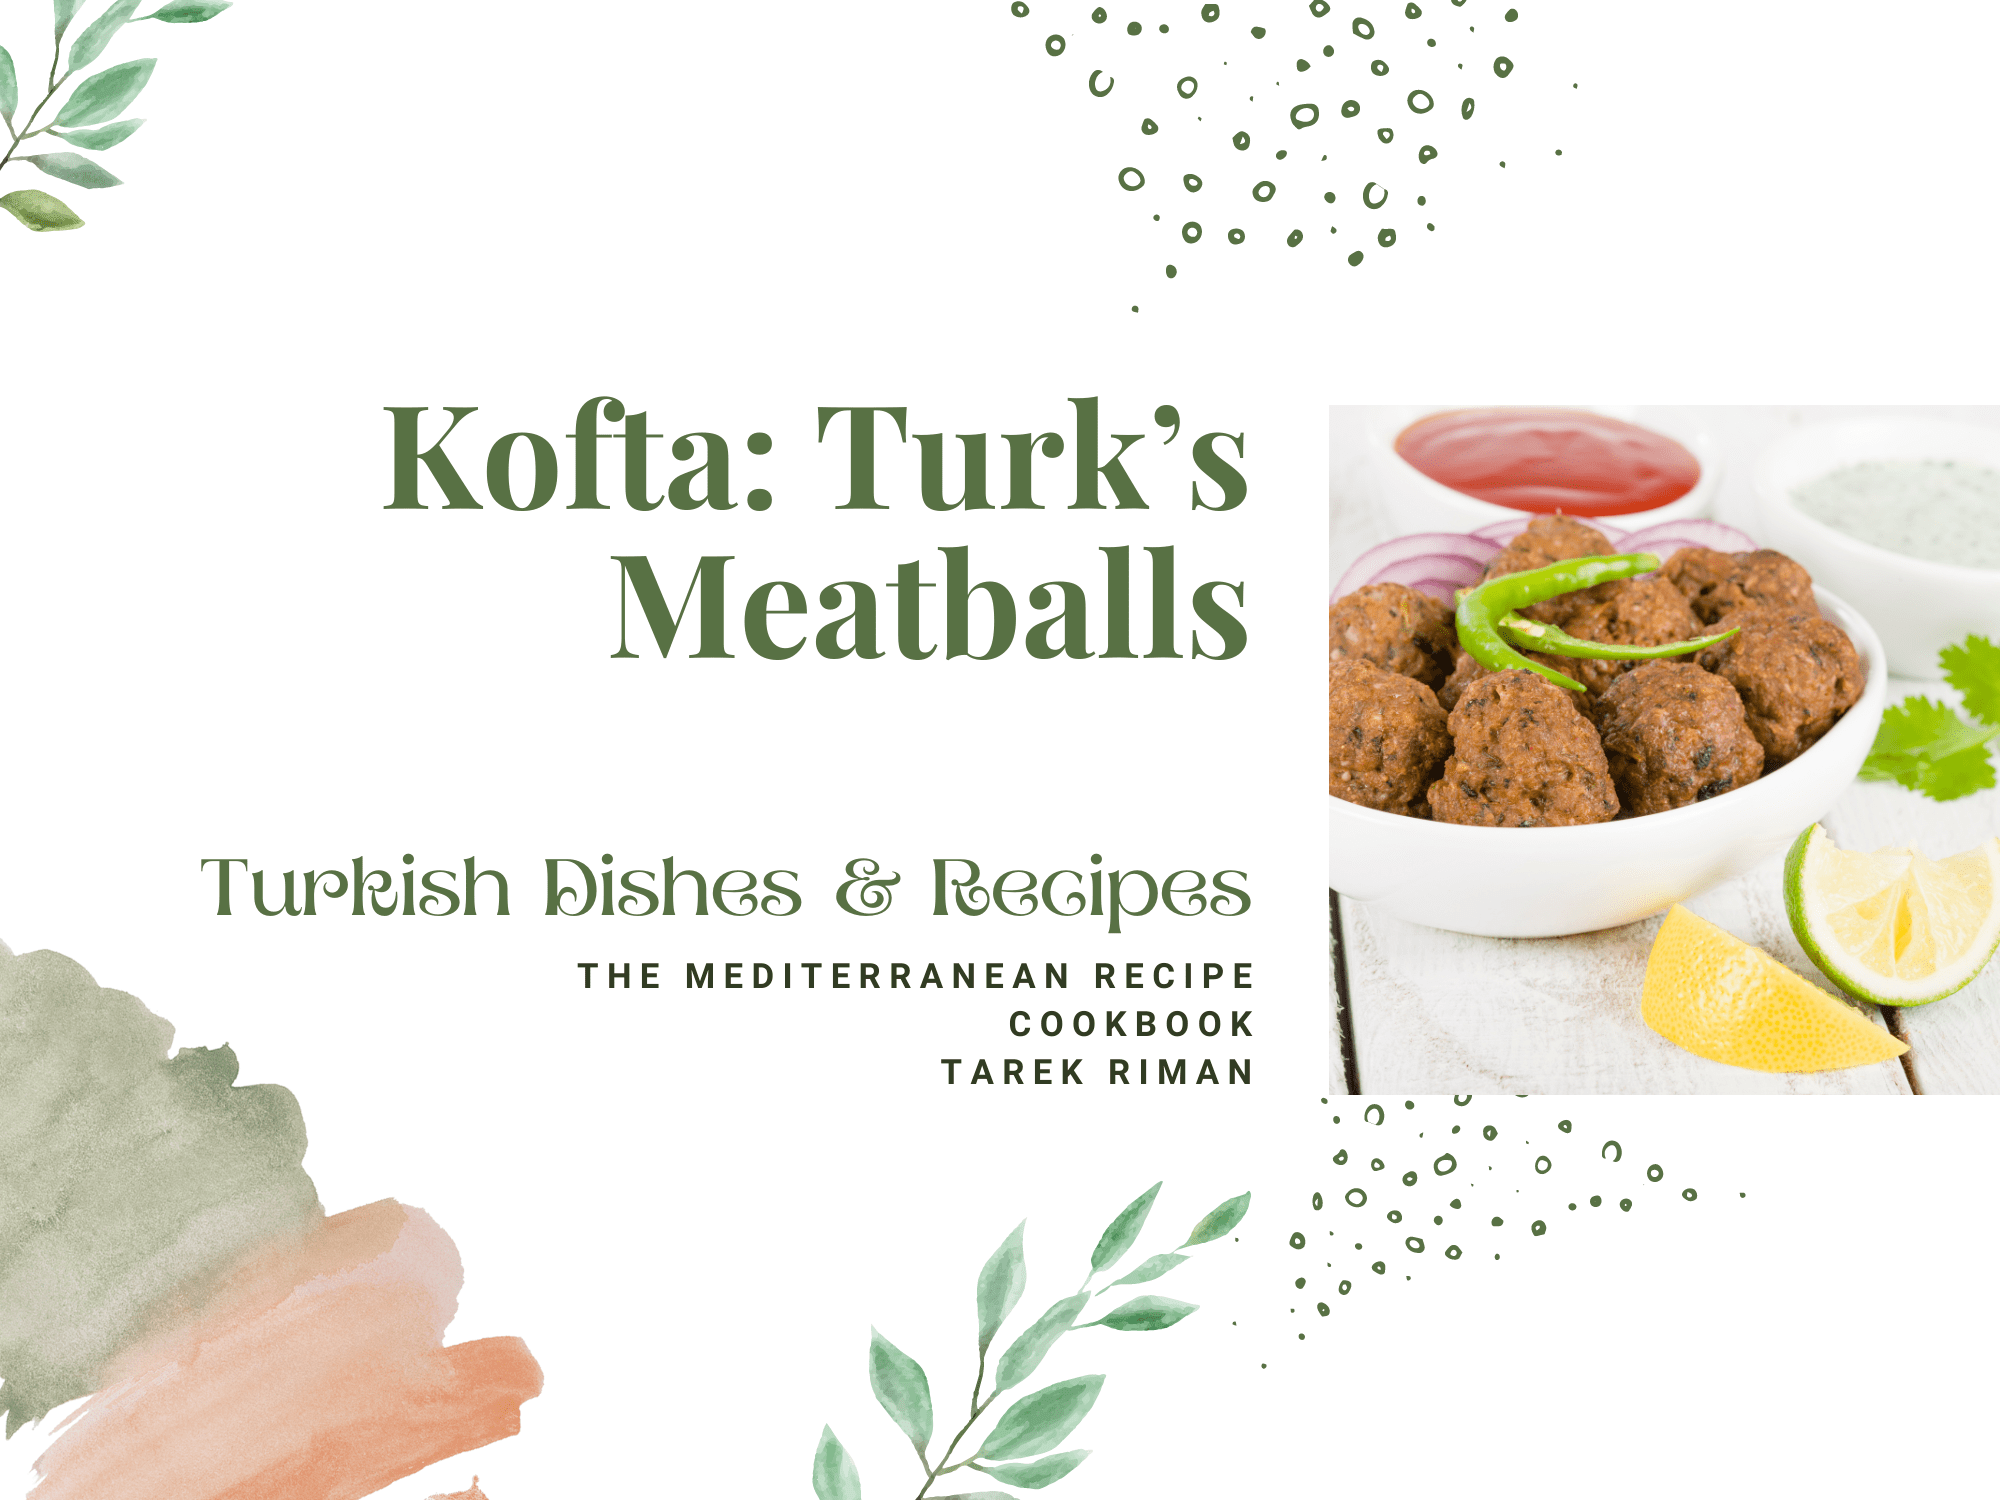 How to make Kofta: Turk’s Meatballs